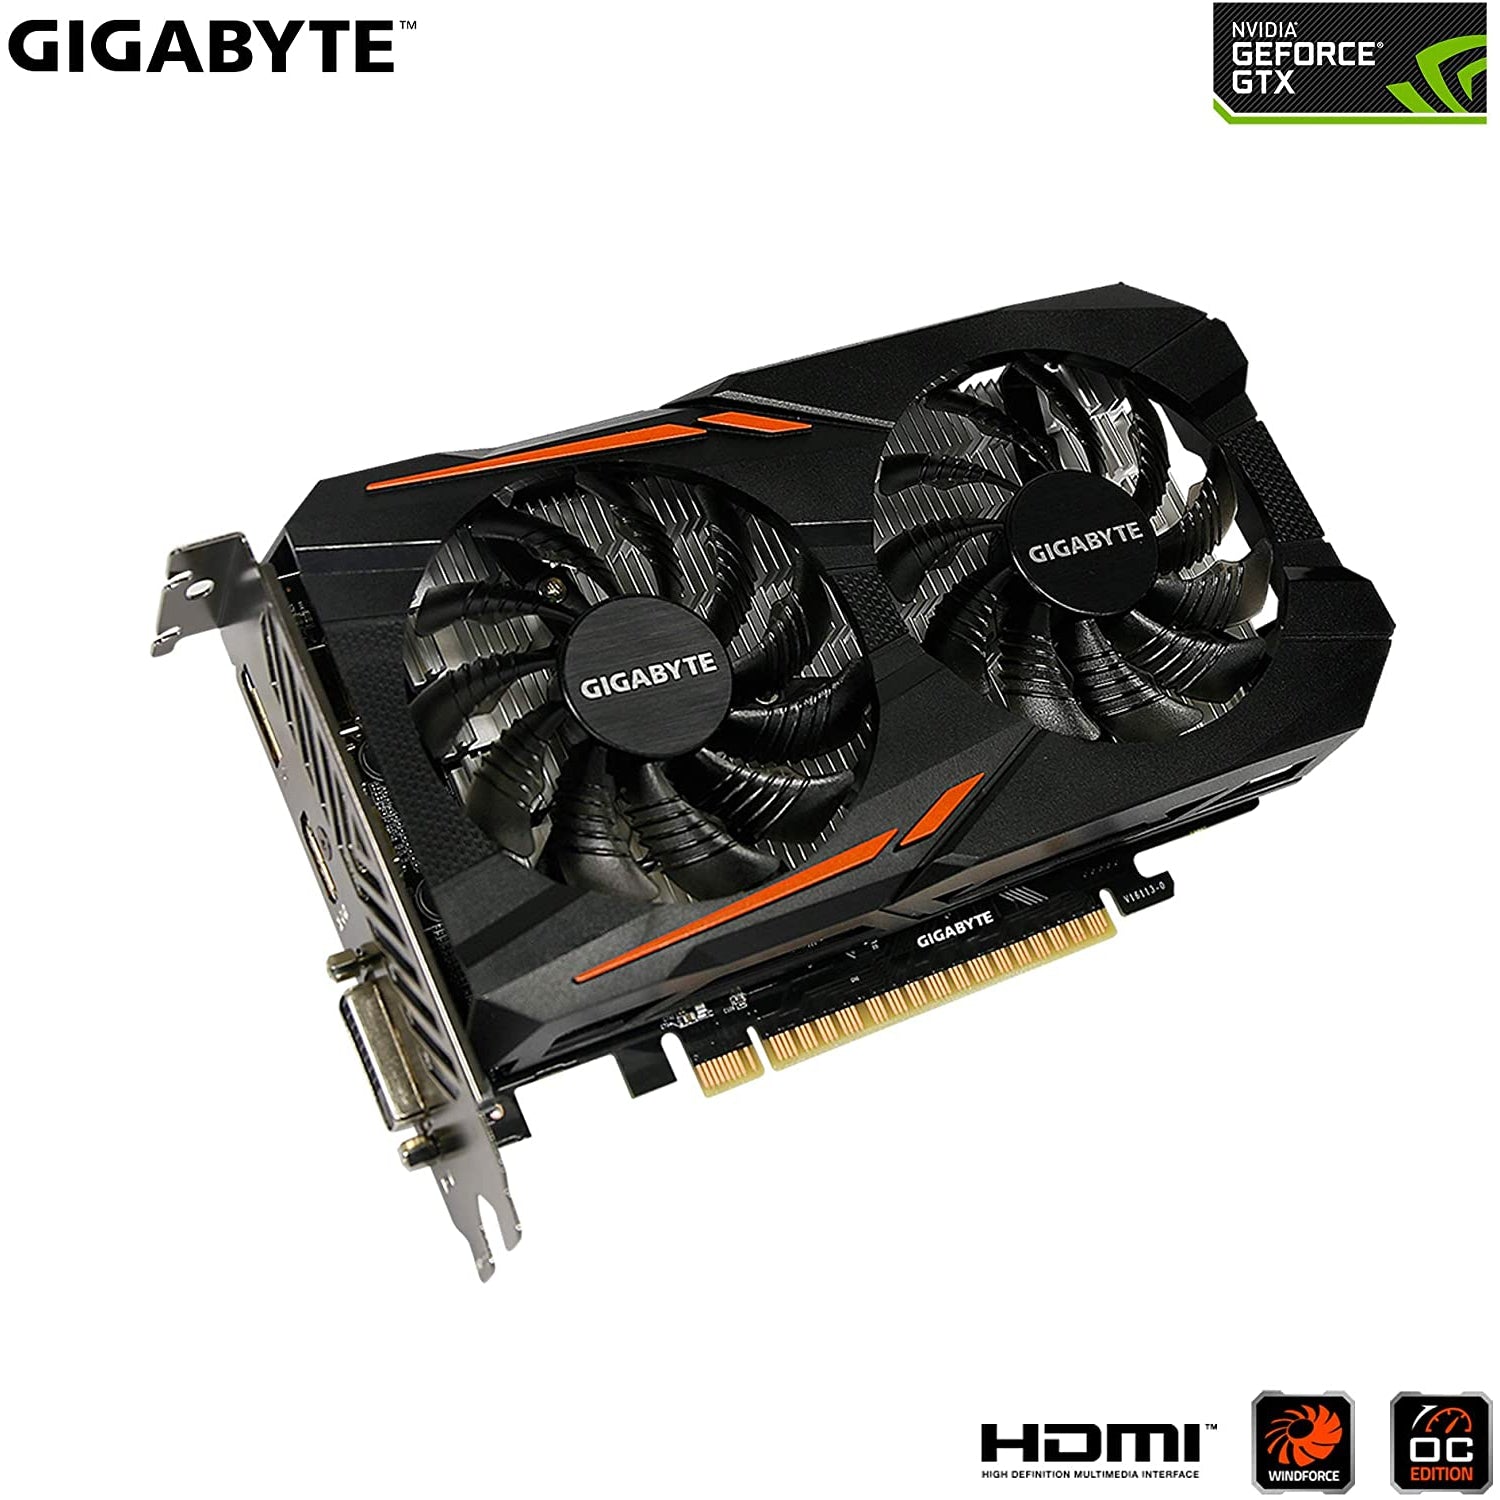 Gigabyte GeForce GTX 1050 Ti 4 GB GDDR5 128 bit Graphics Card (GV-N105TOC-4GD)